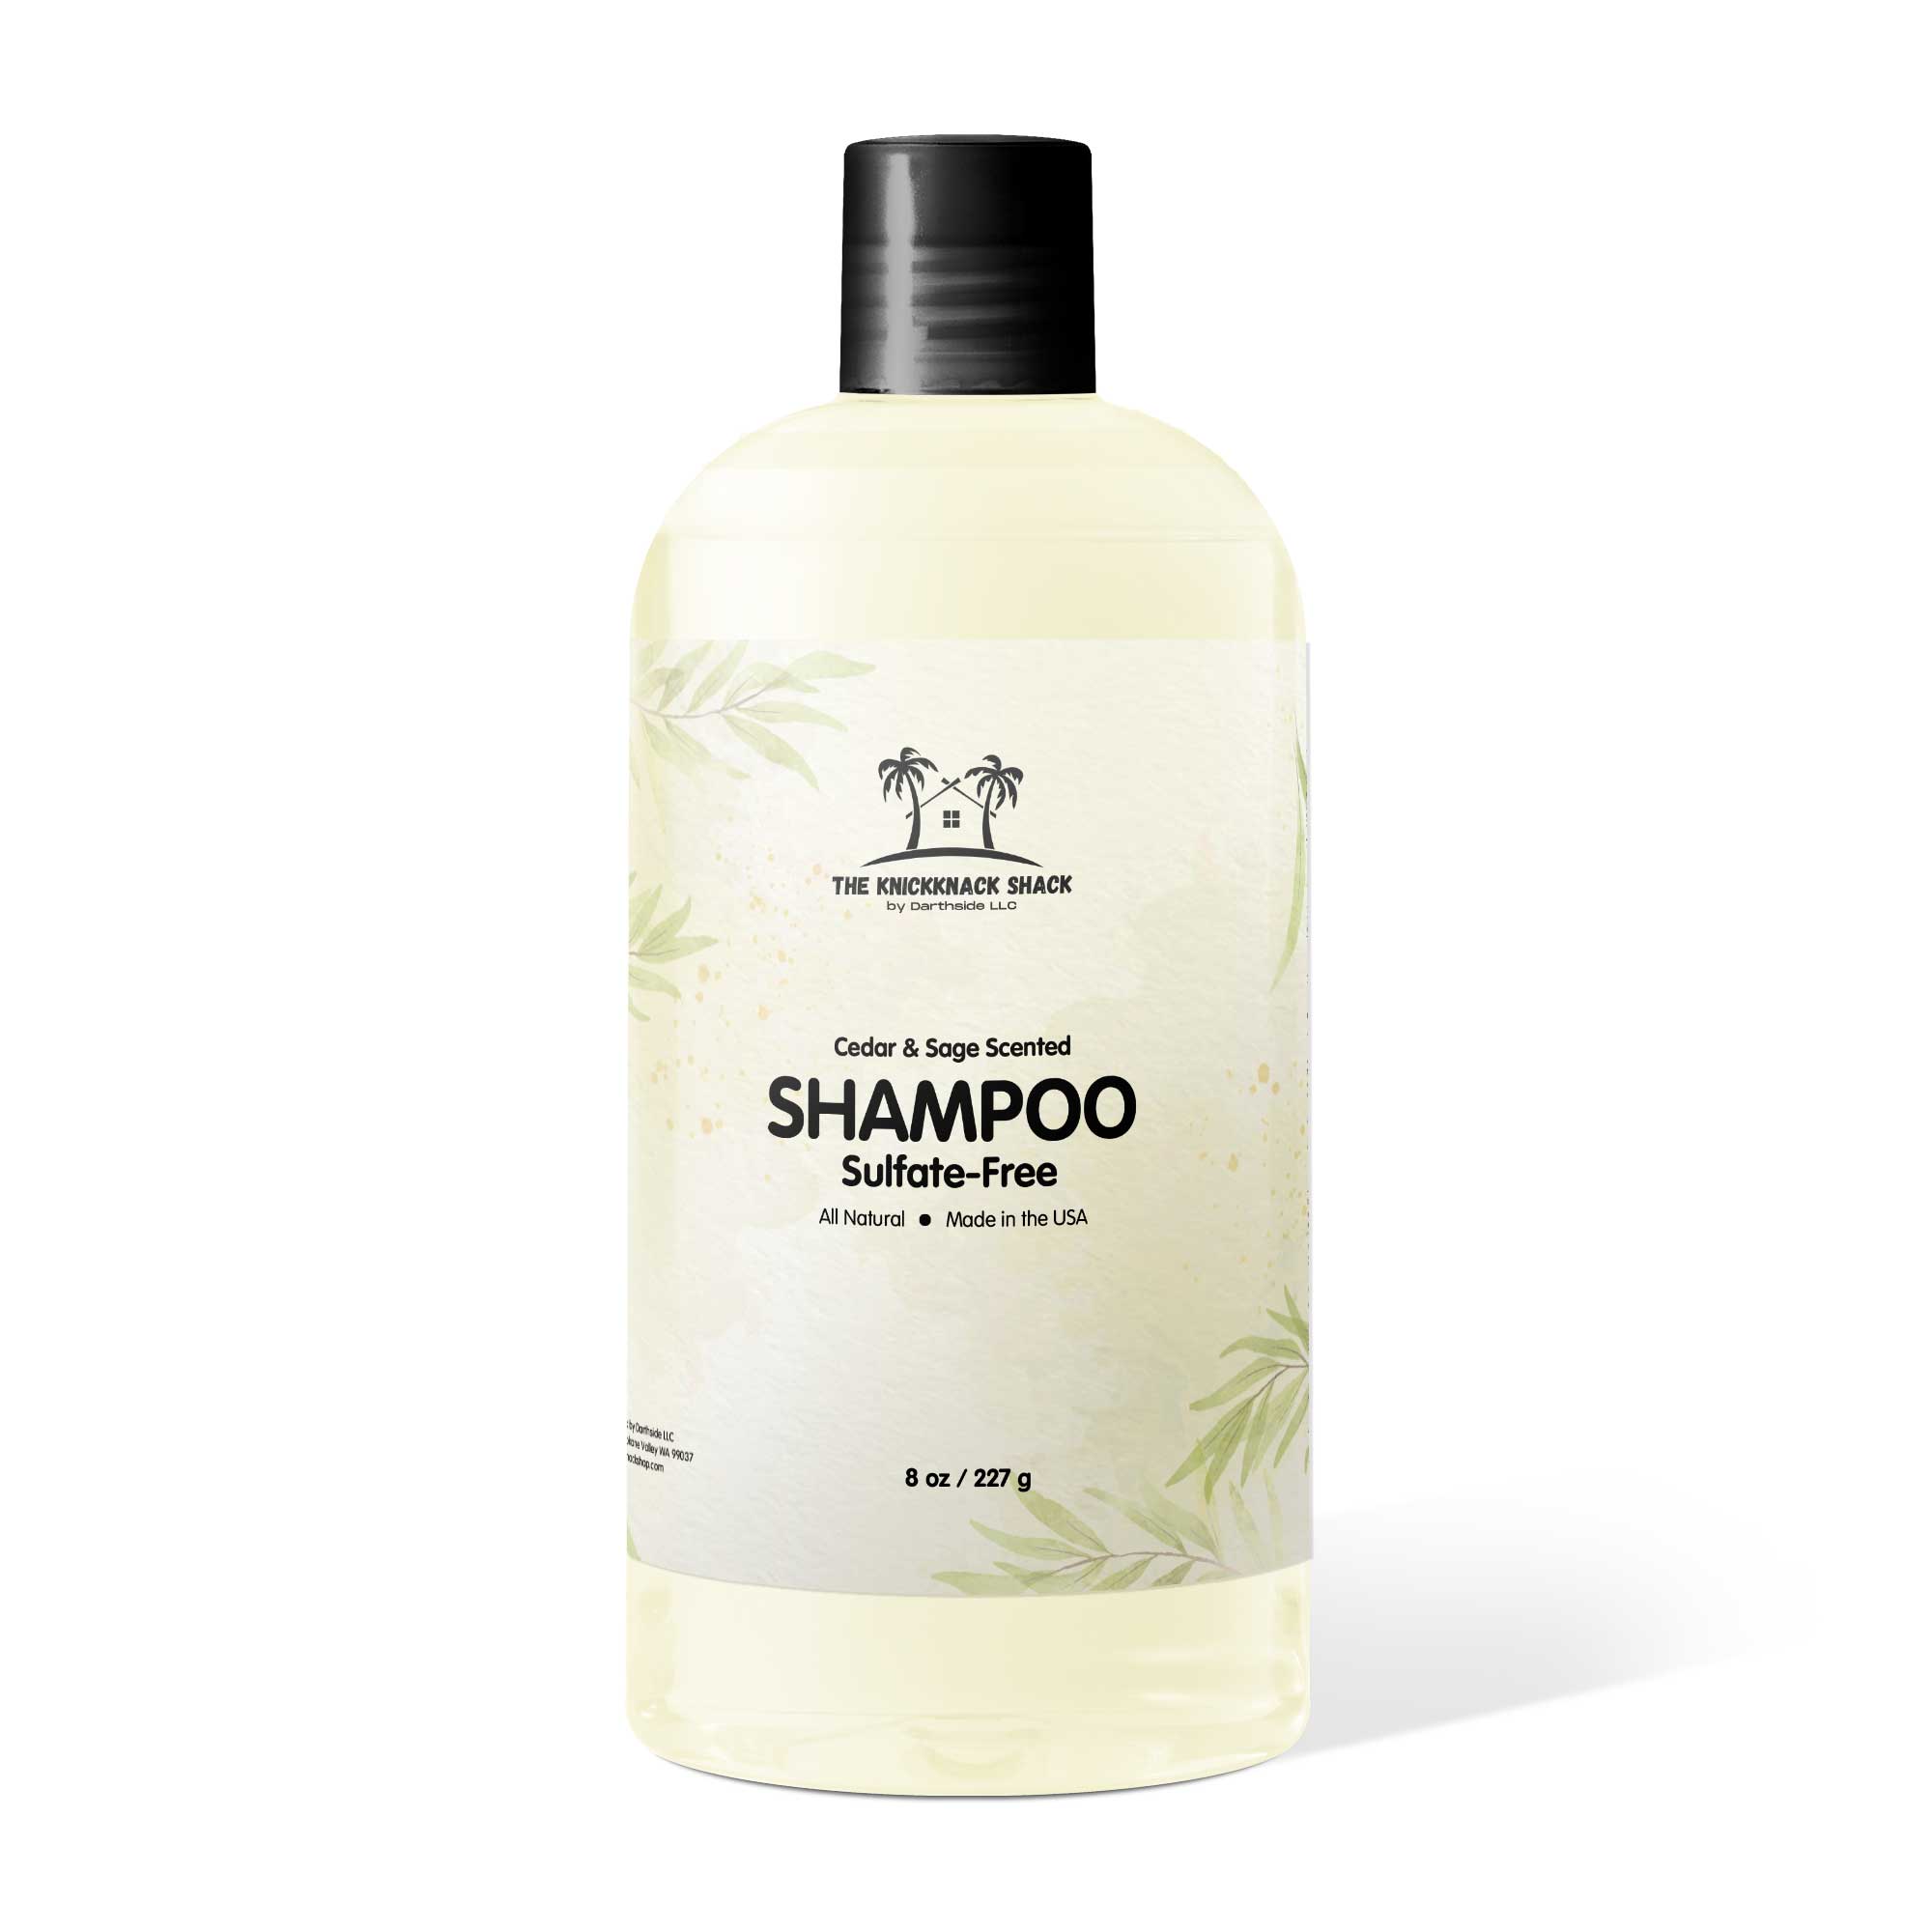 Cedar & Sage Scented Sulfate-Free Shampoo